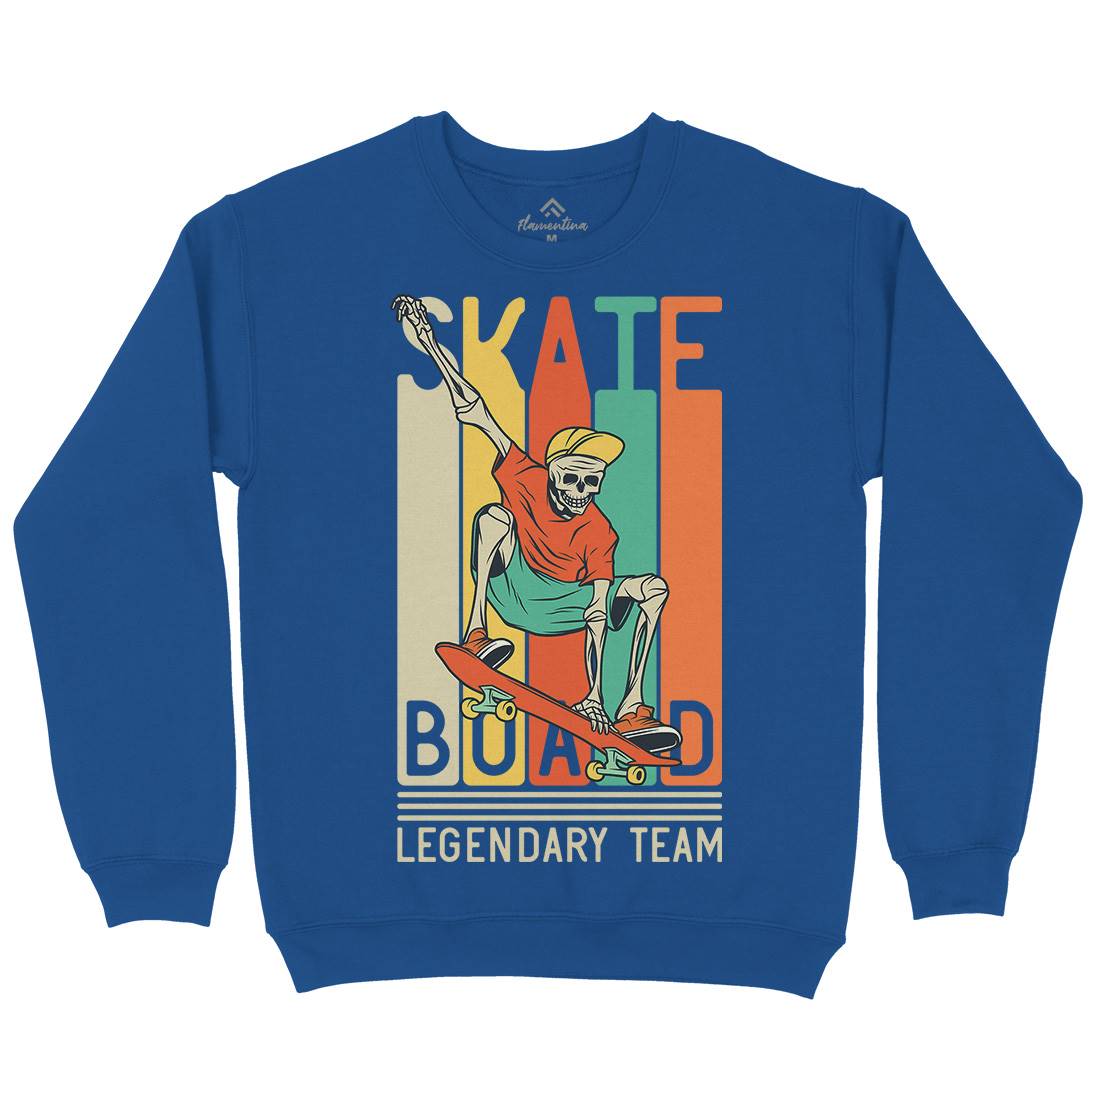 Legendary Team Kids Crew Neck Sweatshirt Skate D952